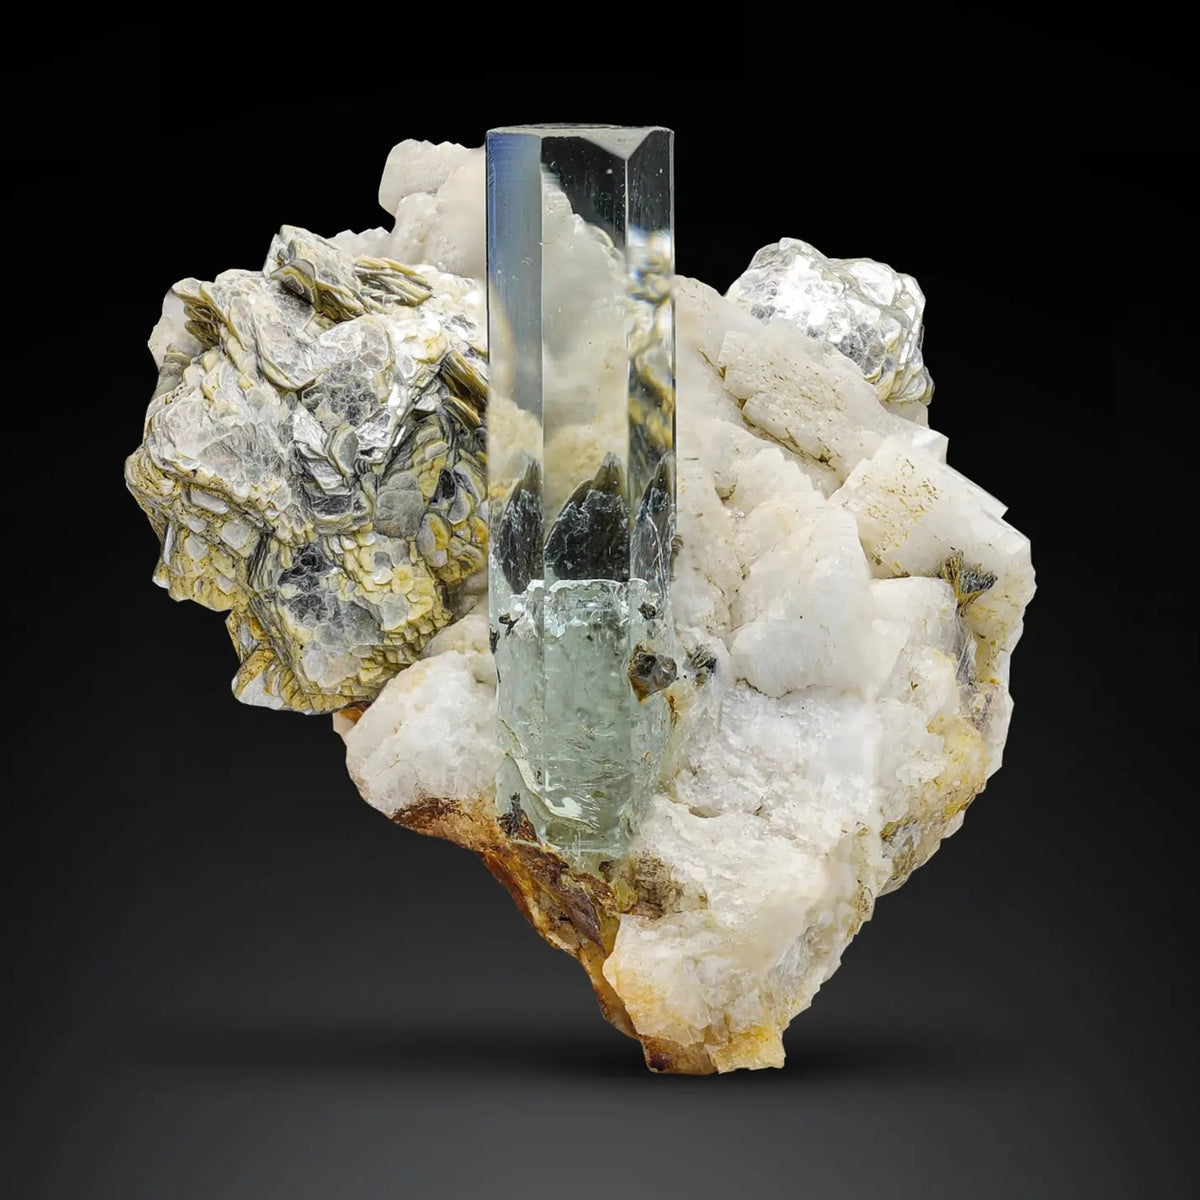 Aquamarine Crystal Albite with Muscovite